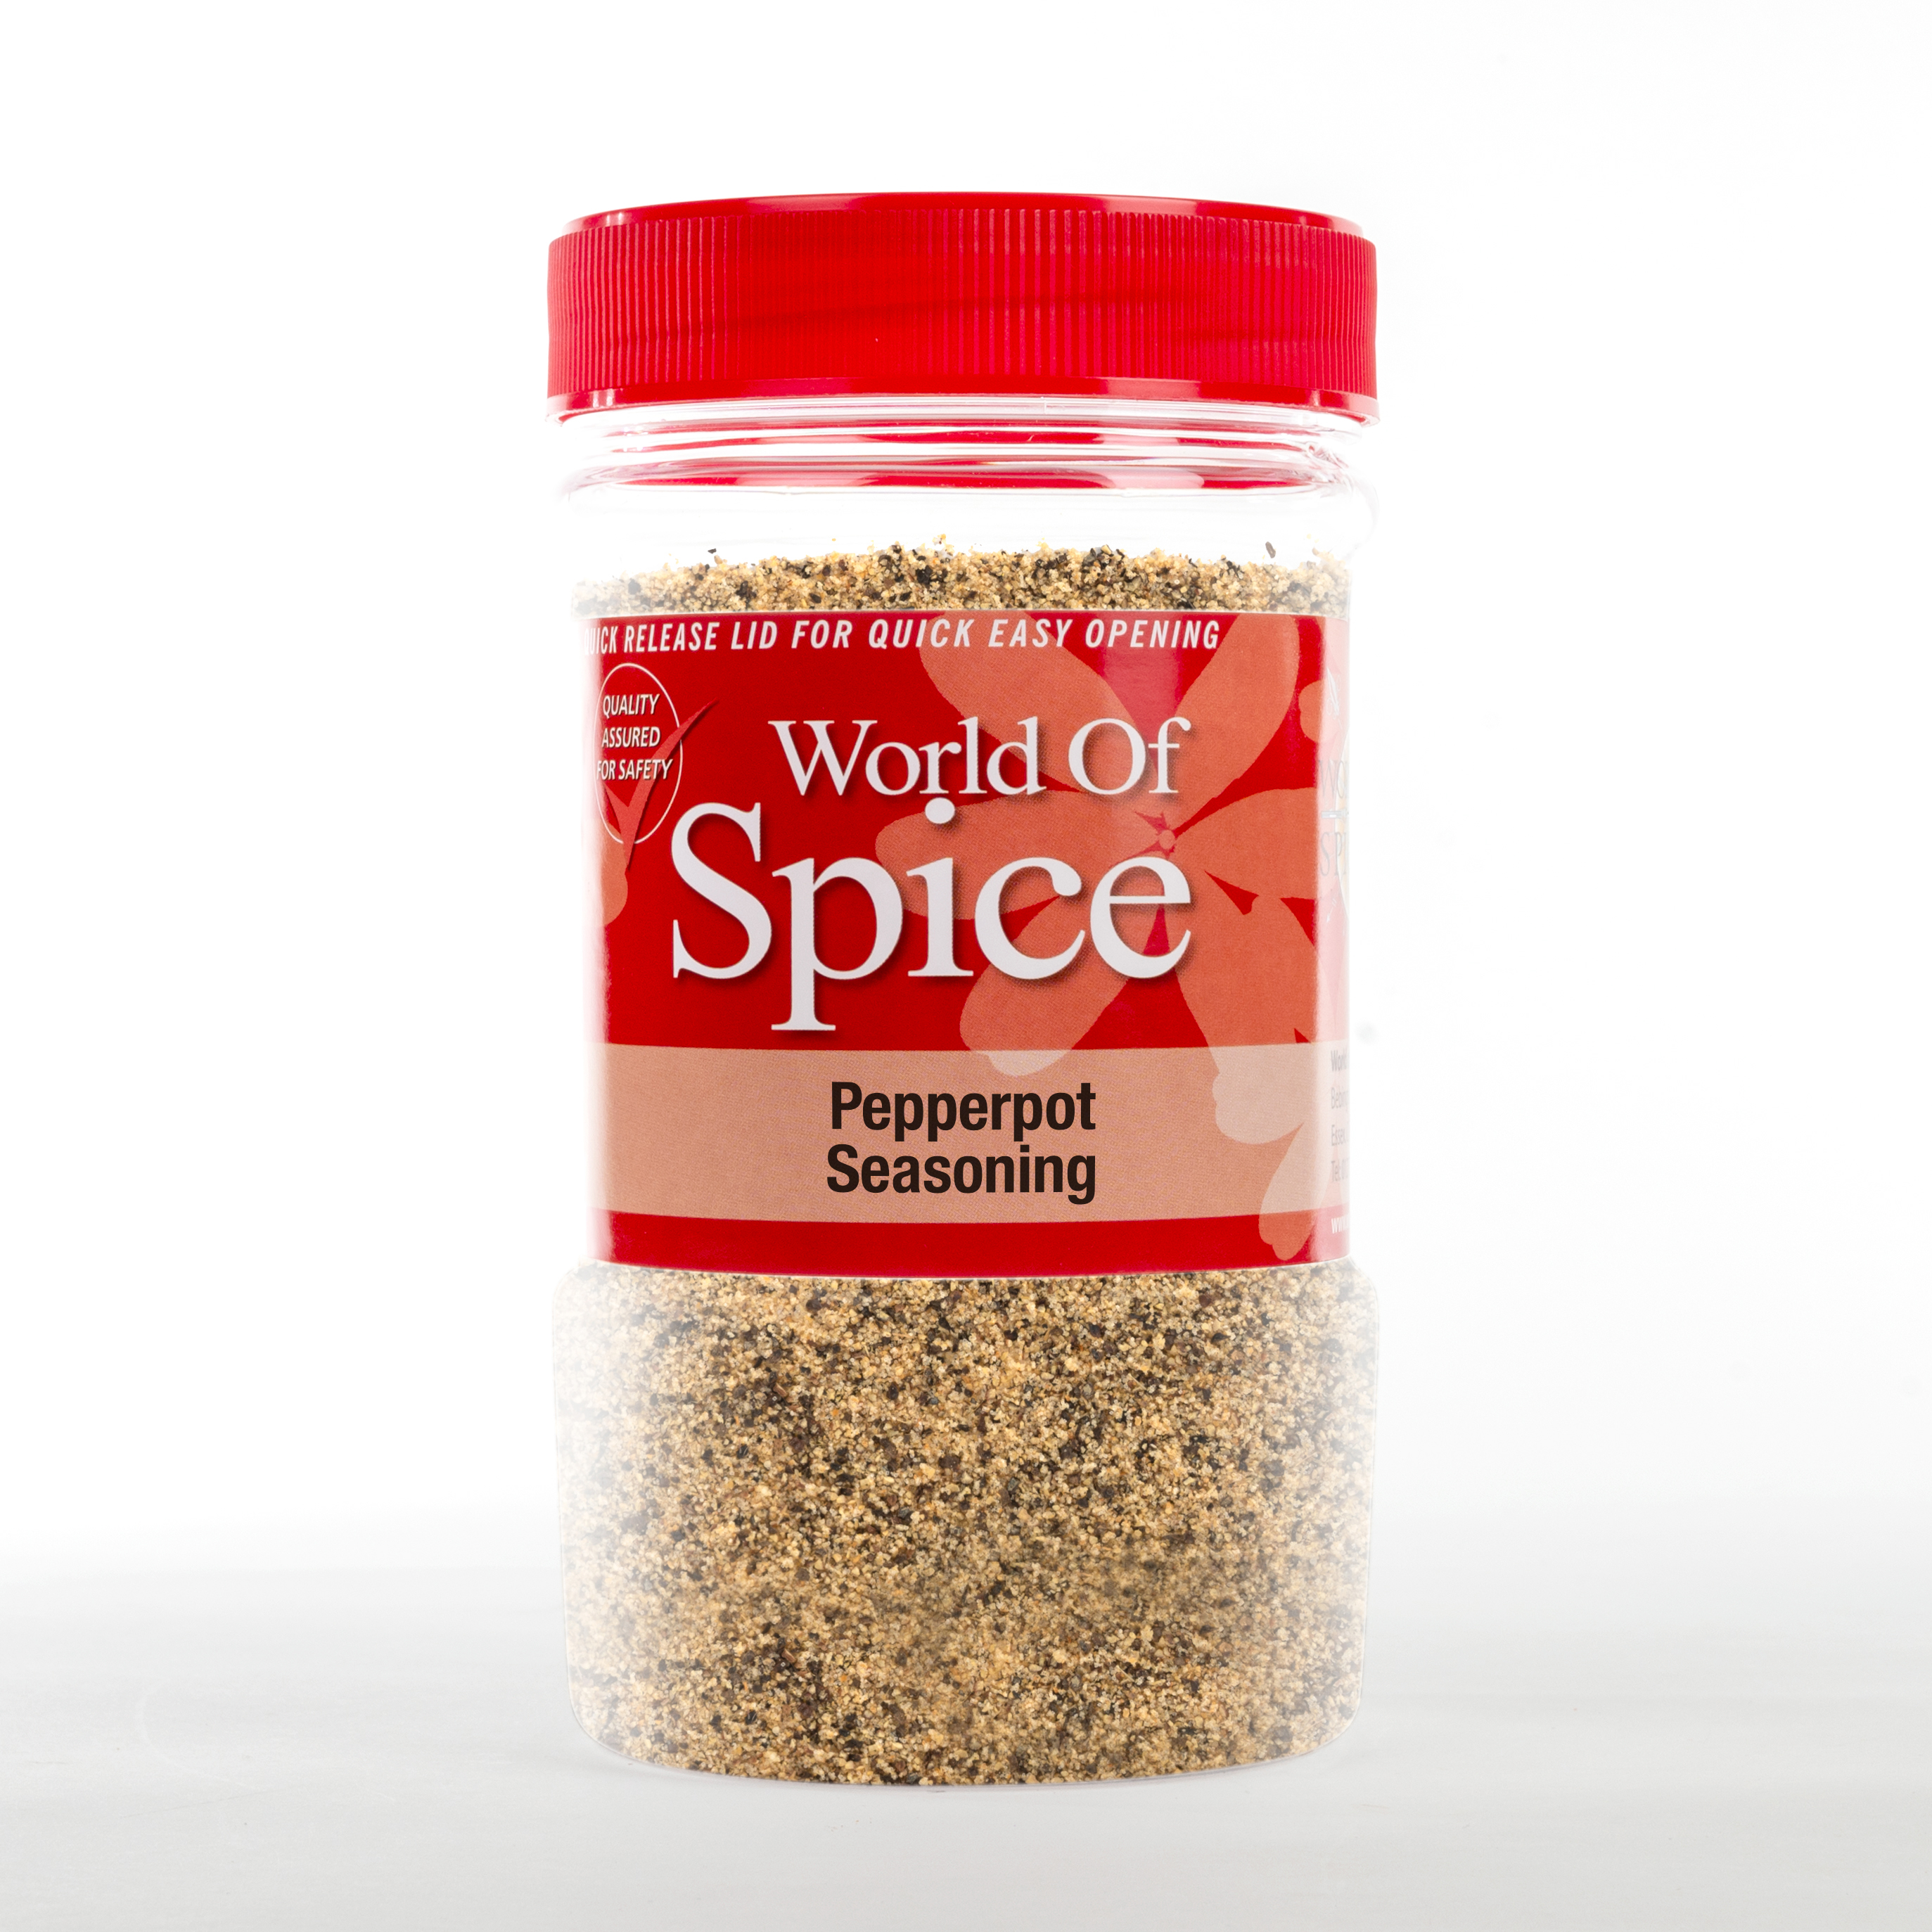 Spices shop London - Jar of Pepperpot Seasoning